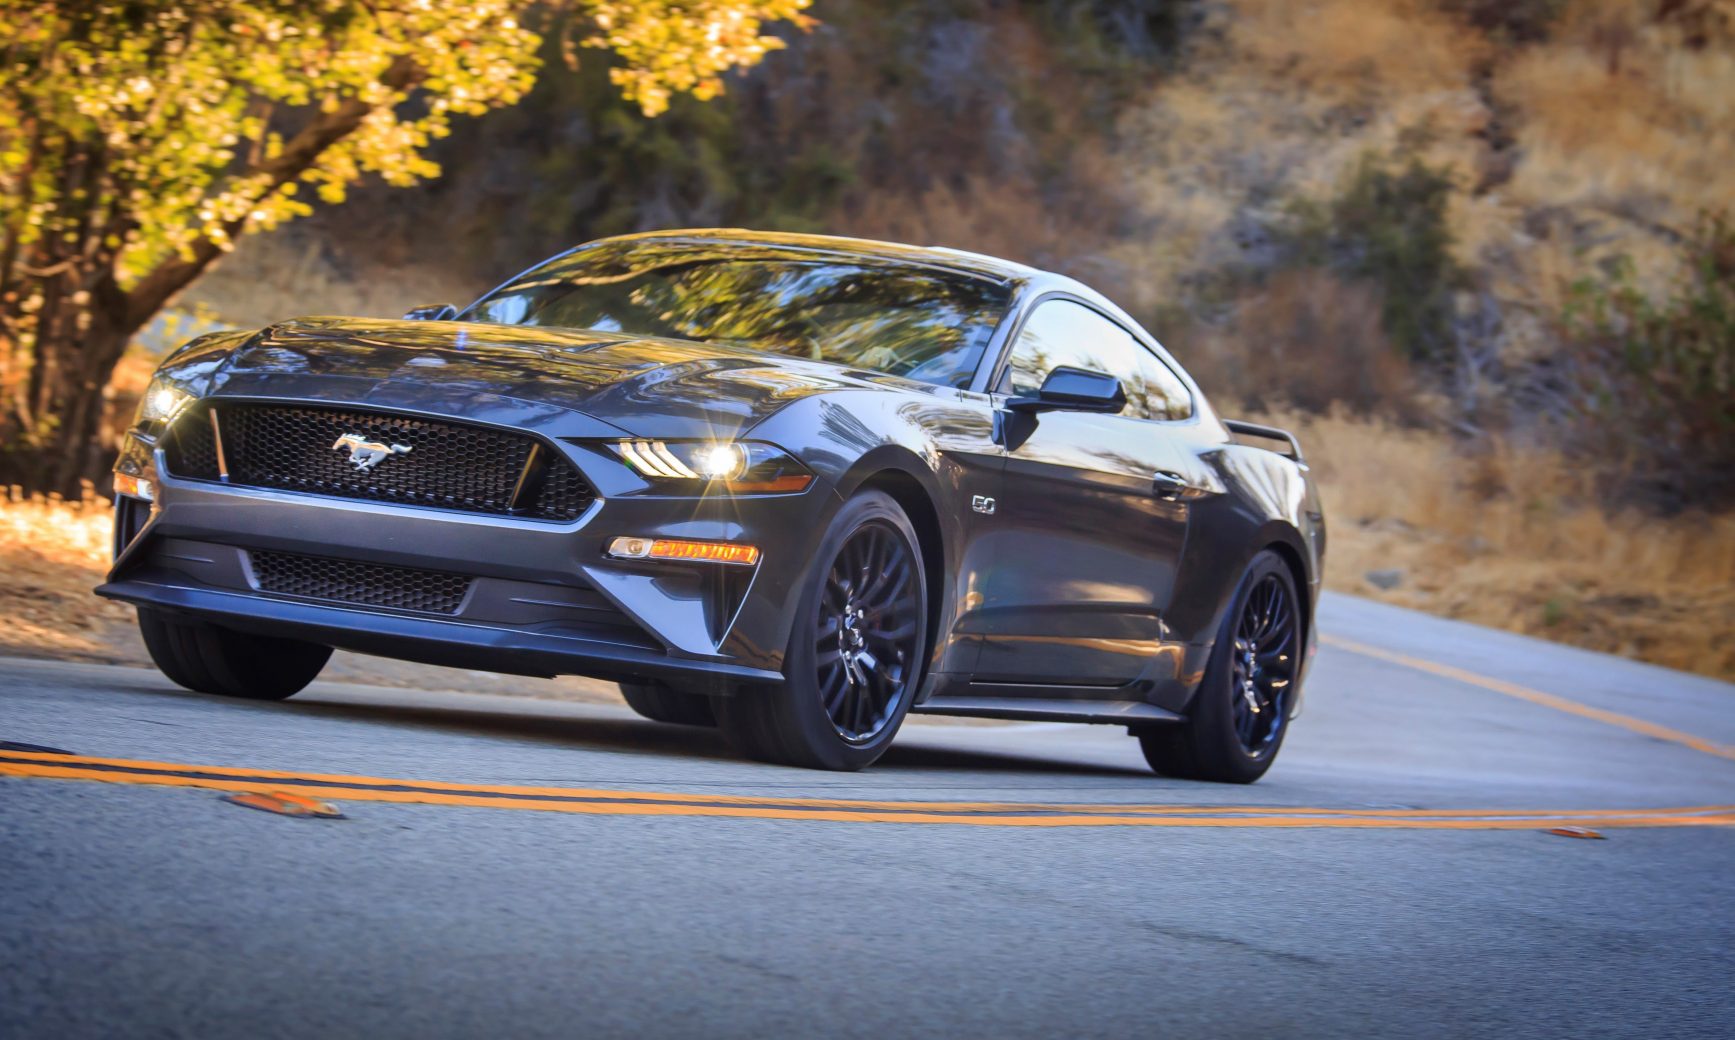 Slider image of Mustang GT